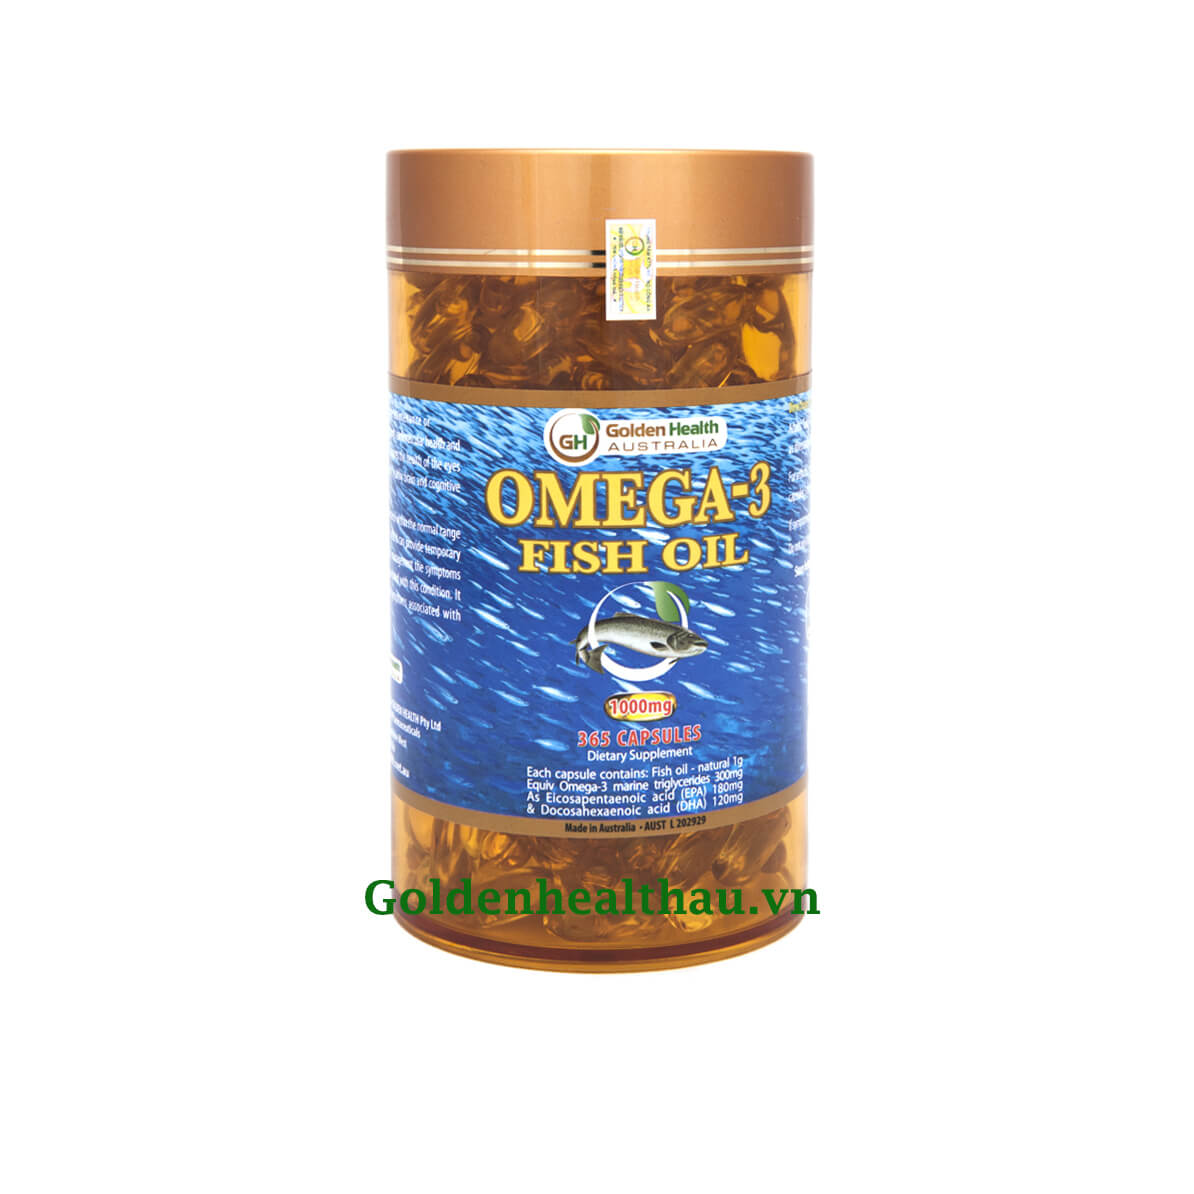  Omega 3 Fish Oil 1000mg, dầu cá hồi omega 3